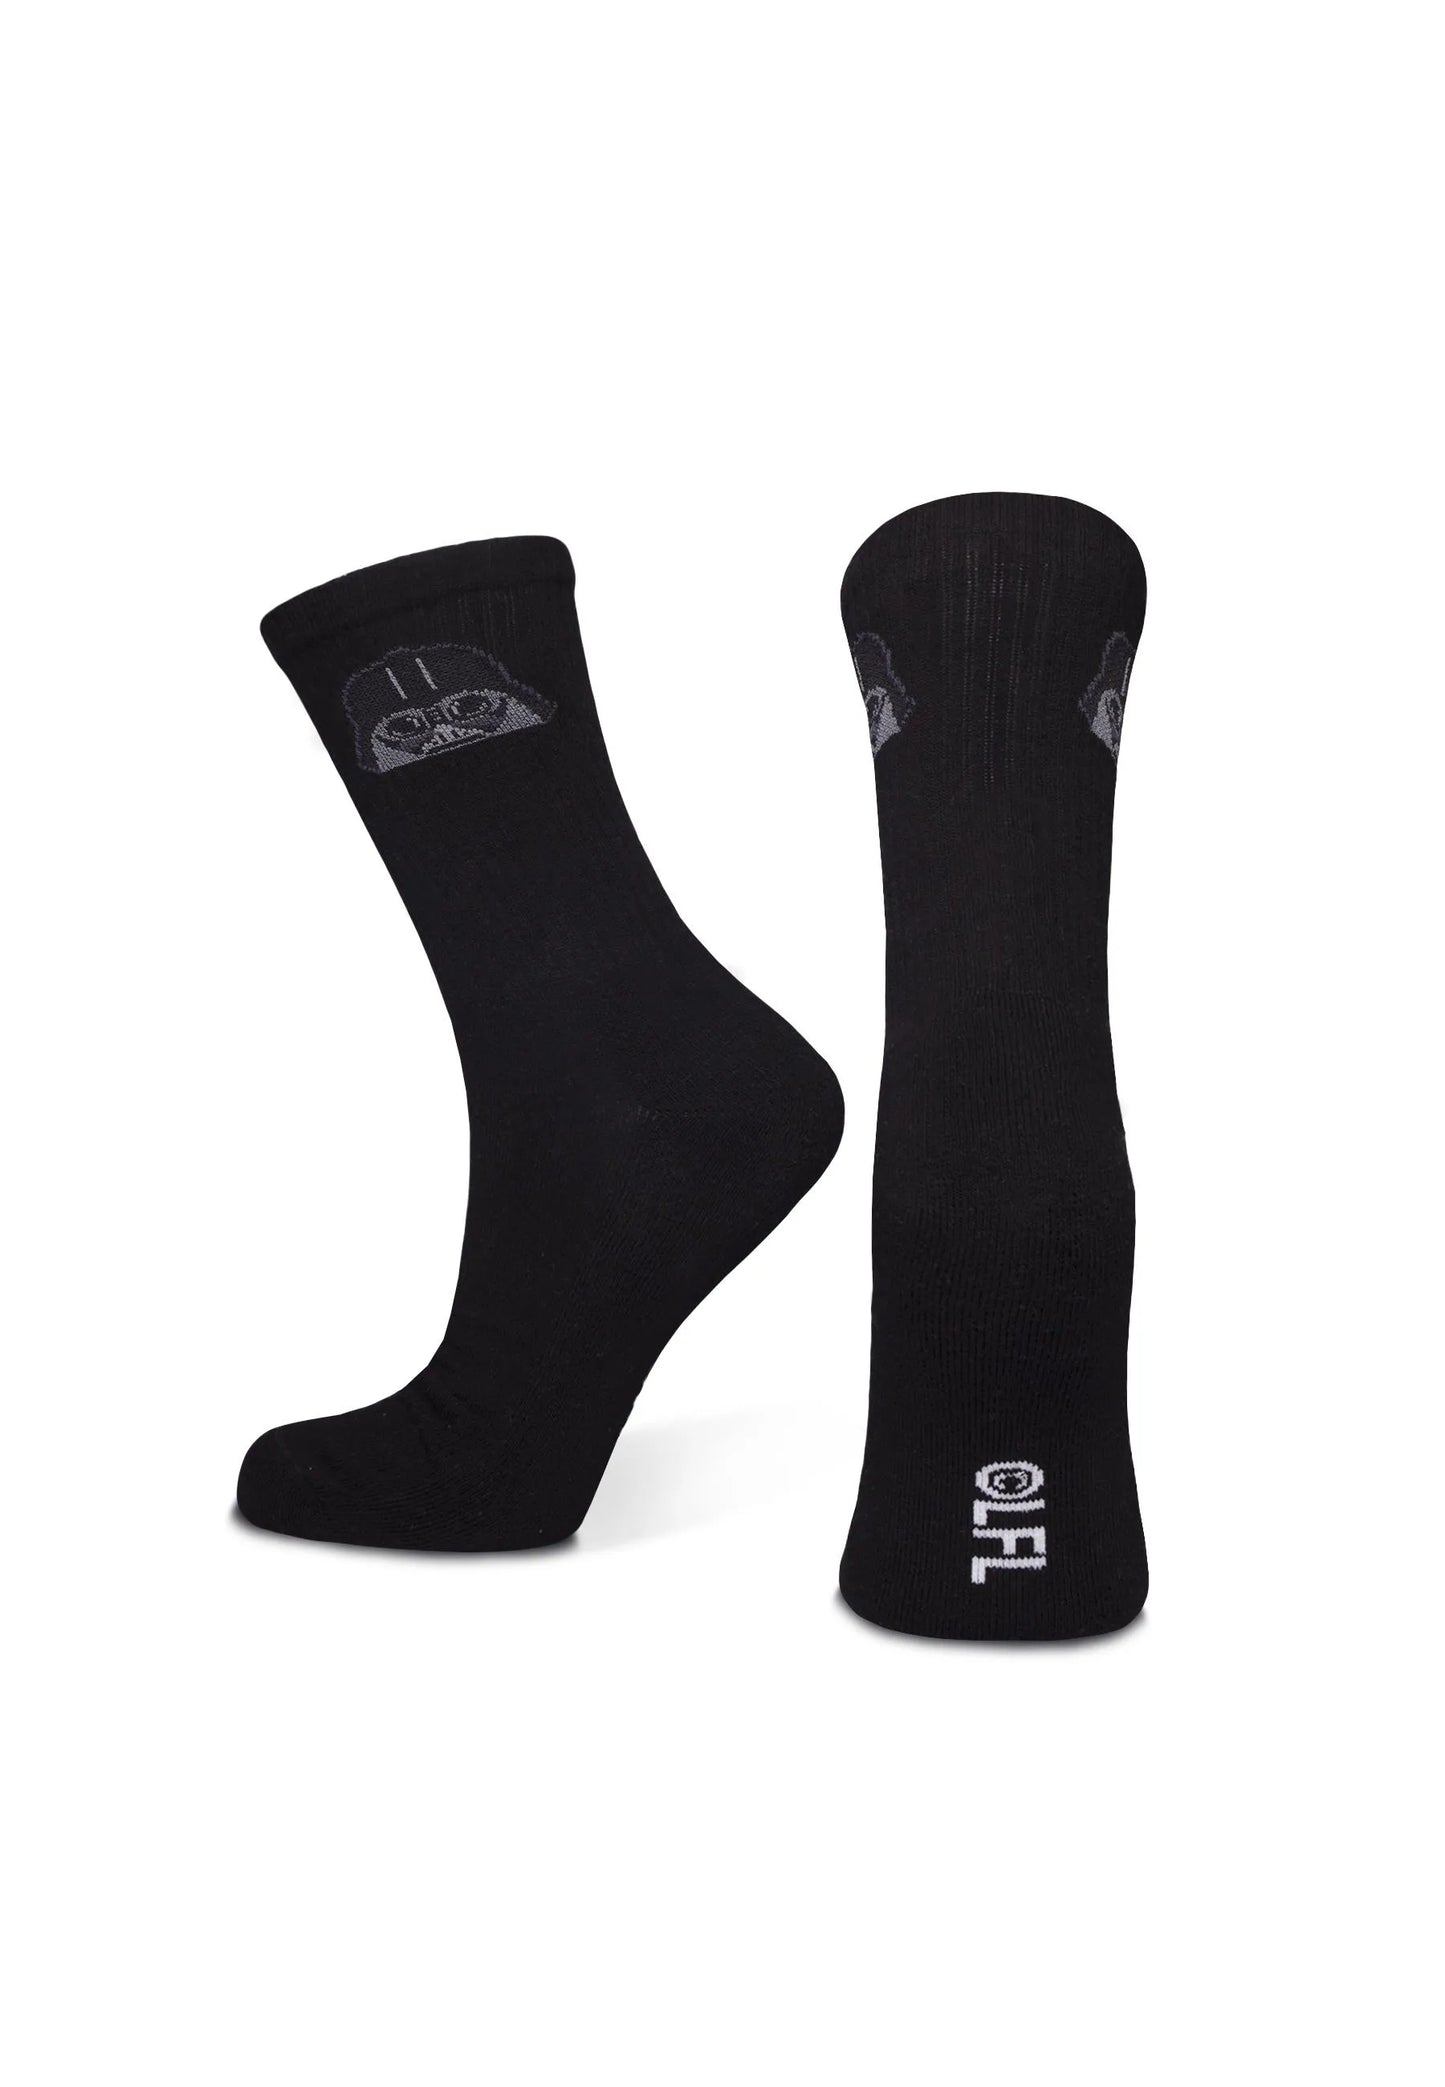 STAR WARS - Sport Socks (3Pack)